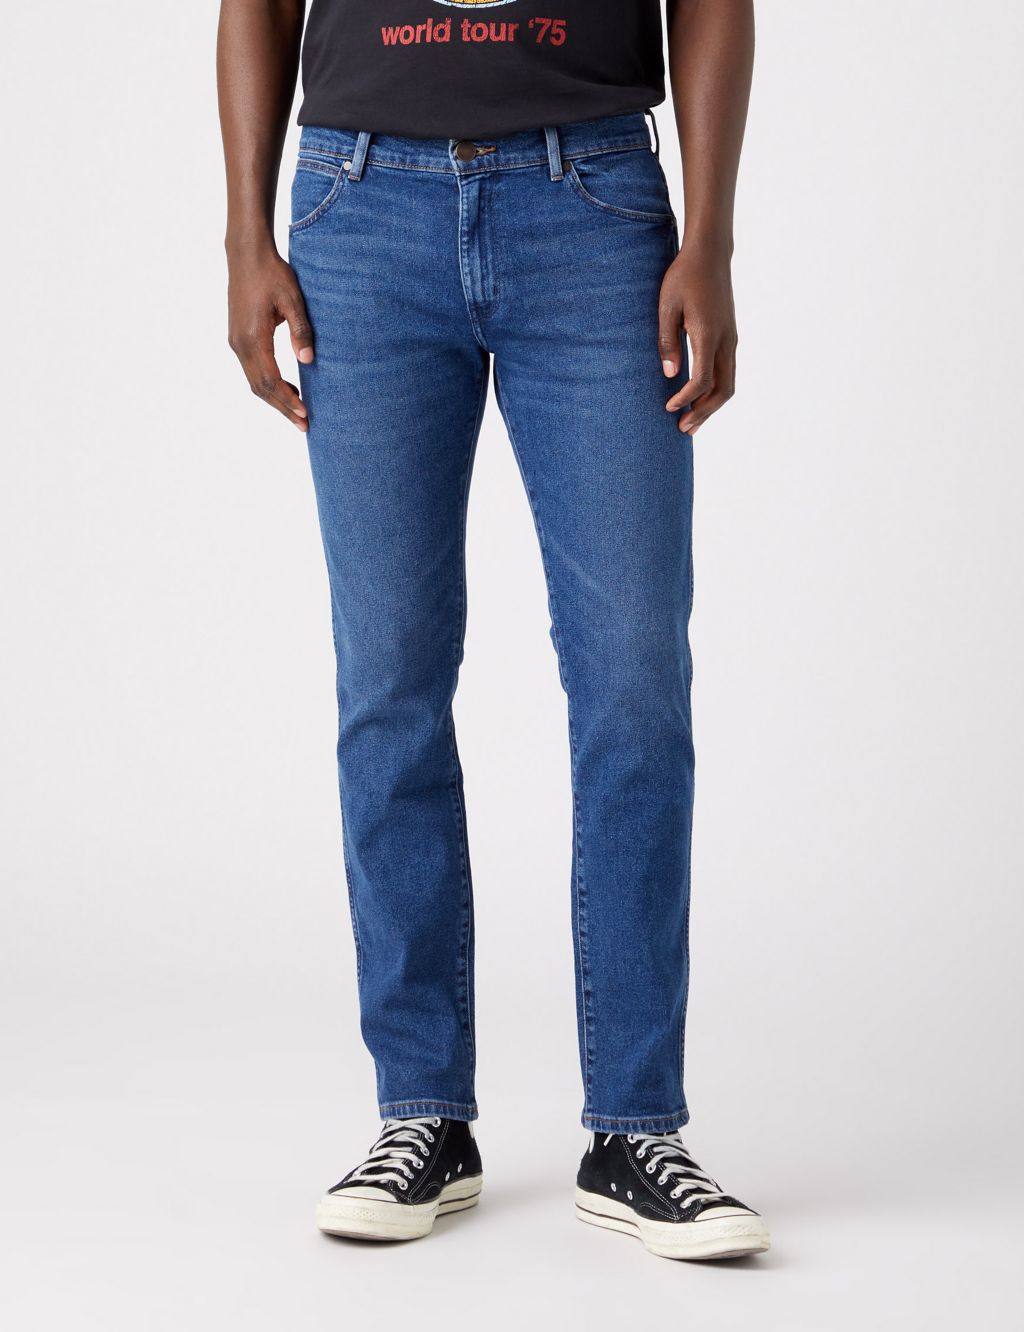 Larston Tapered Slim Fit 5 Pocket Jeans image 1